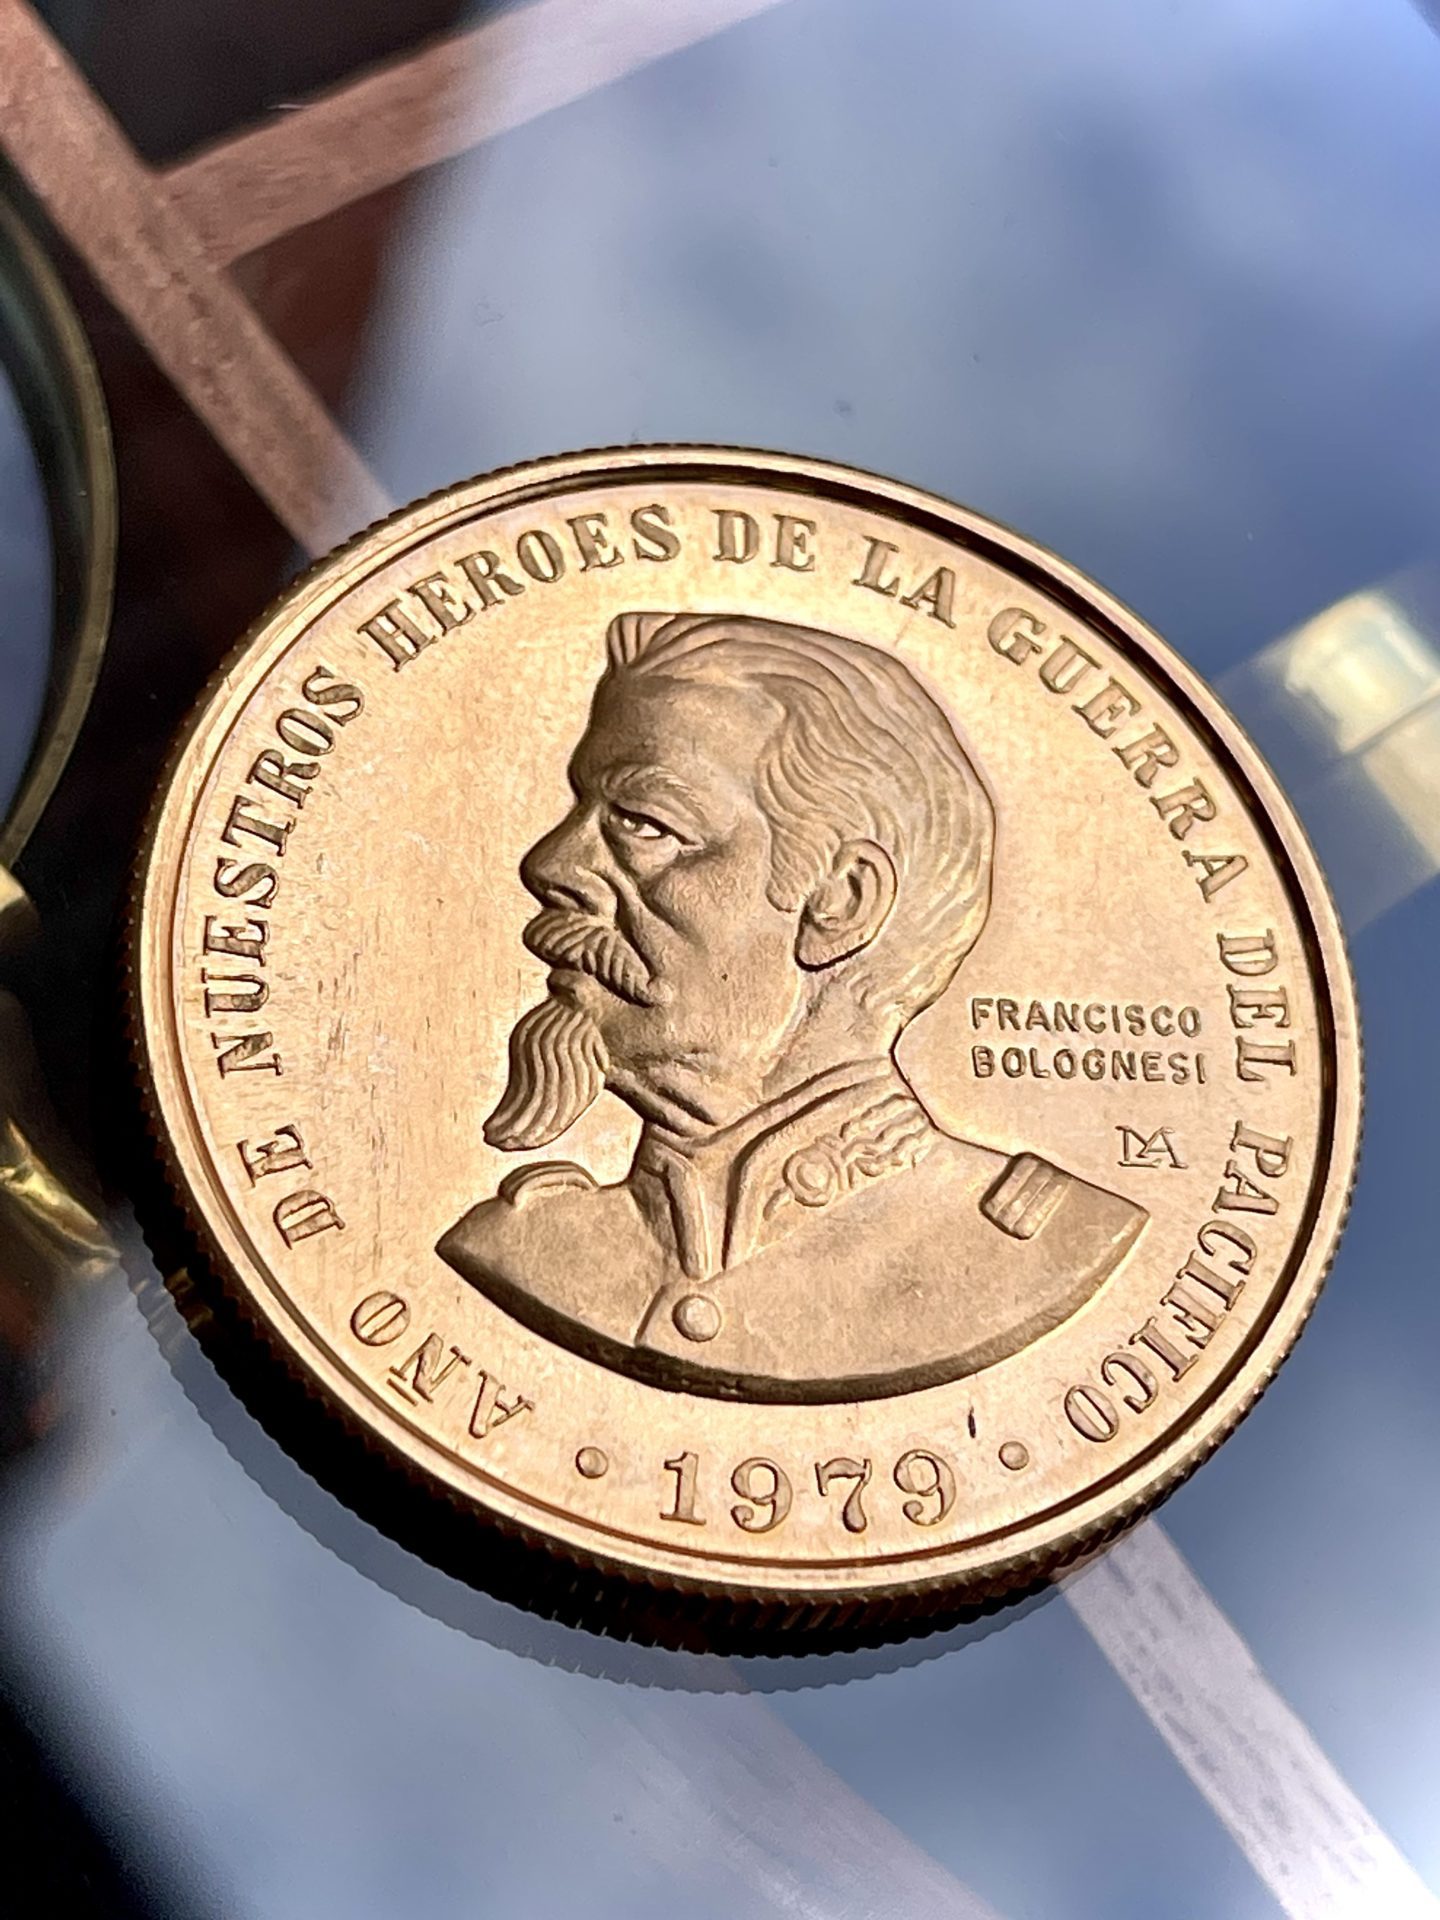 Perú 1979 100000 soles Francisco bolognesi 1oz oro